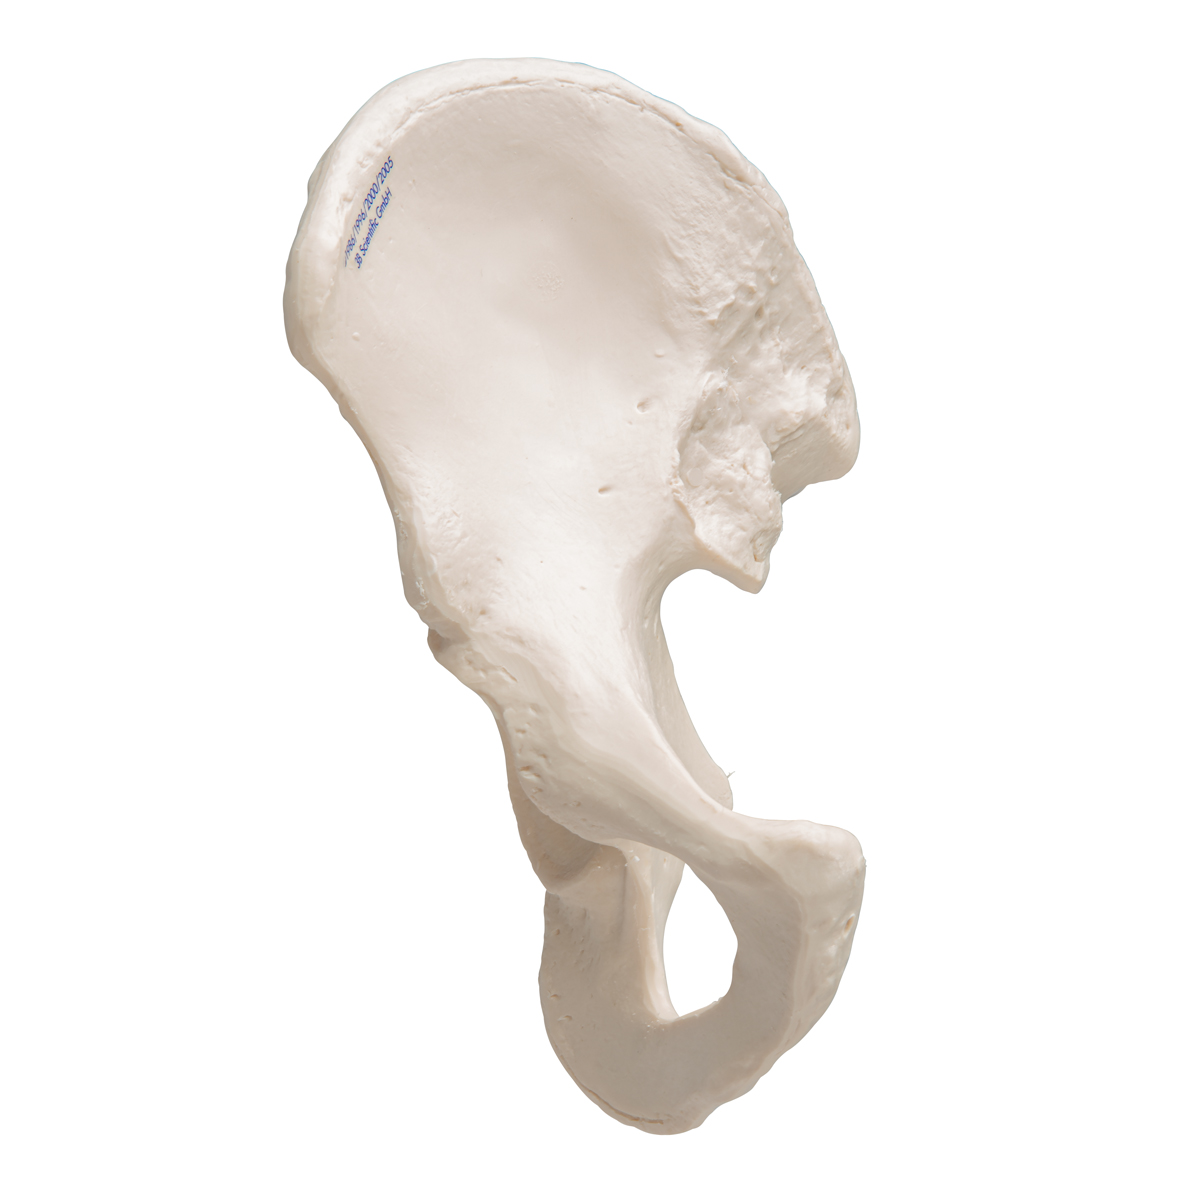 Human Hip Bone Model - 3B Smart Anatomy - 1019365 - 3B Scientific - A35